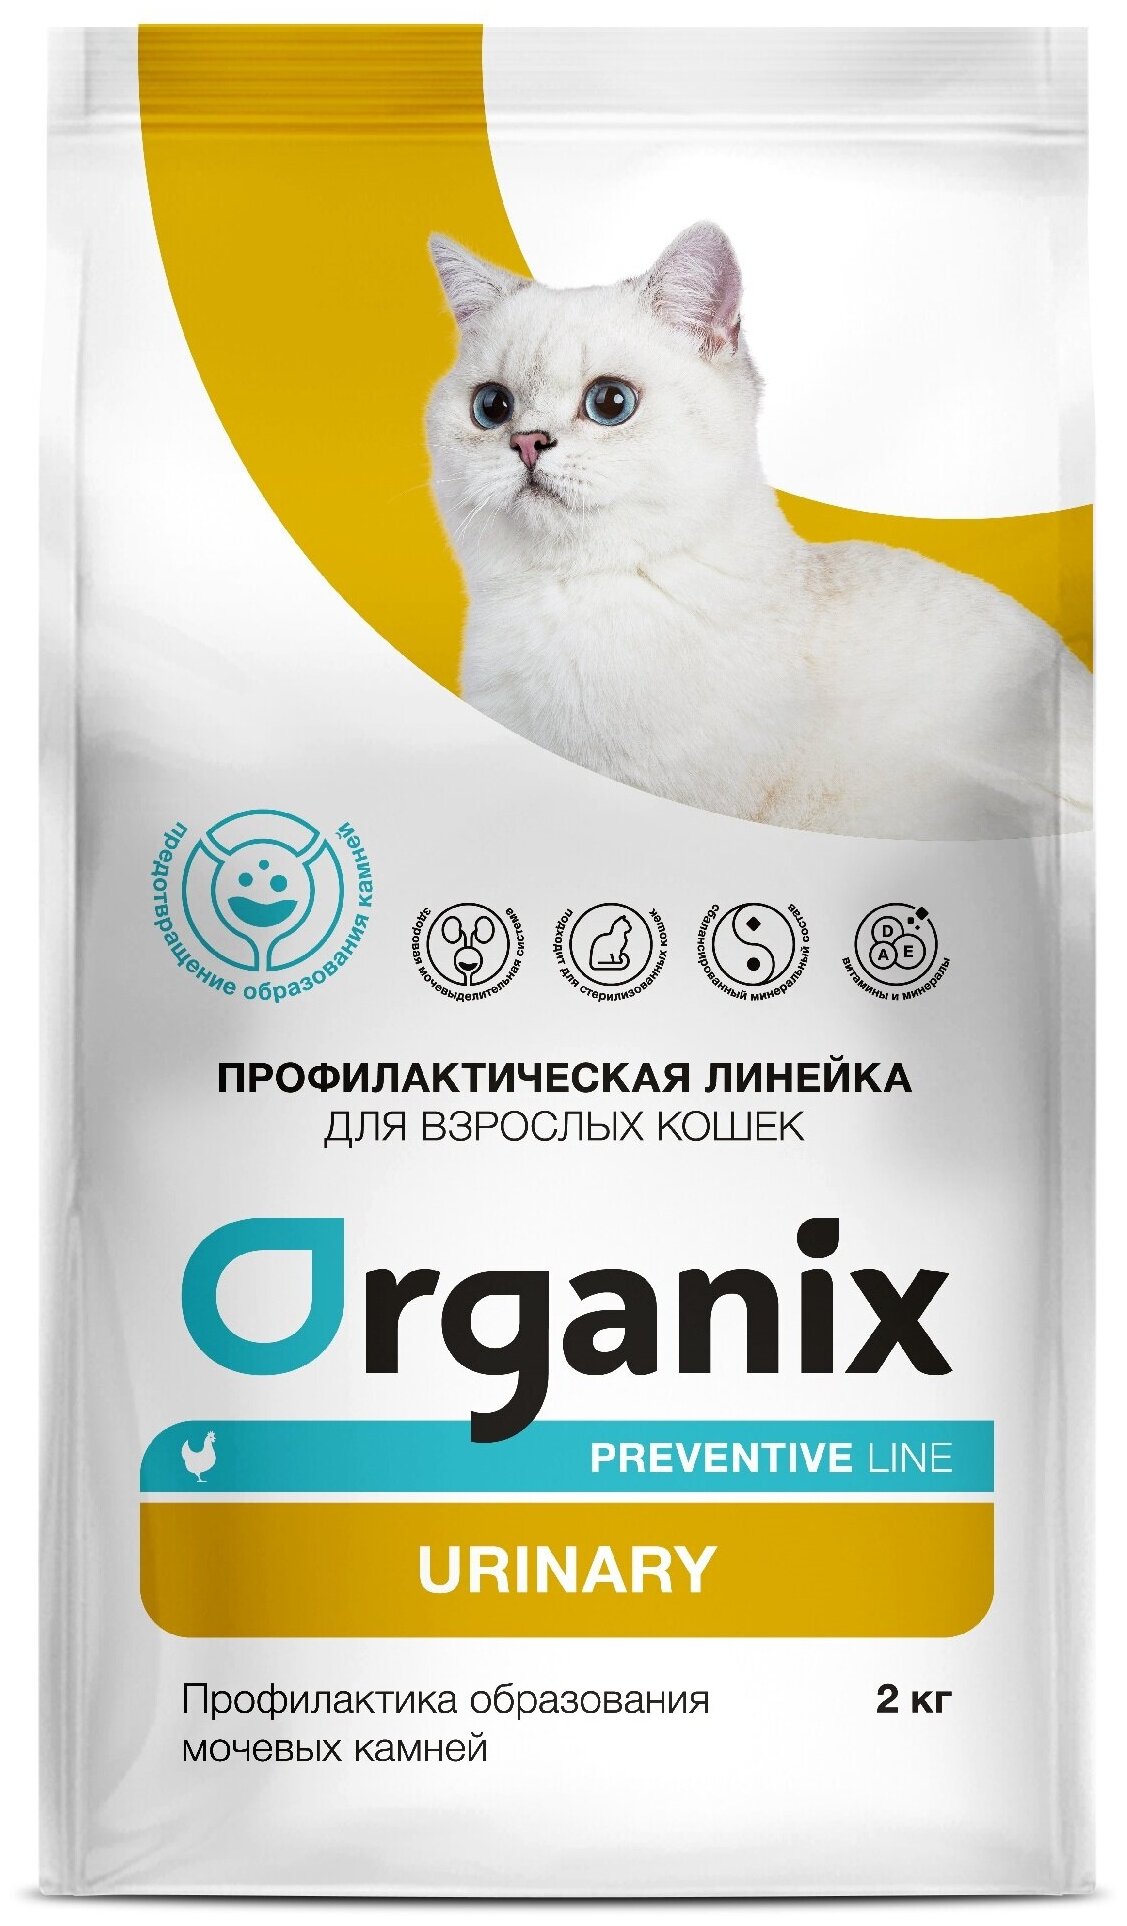 Organix Urinary корм для кошек, профилактика образования мочевых камней, курица 2 кг - фотография № 1